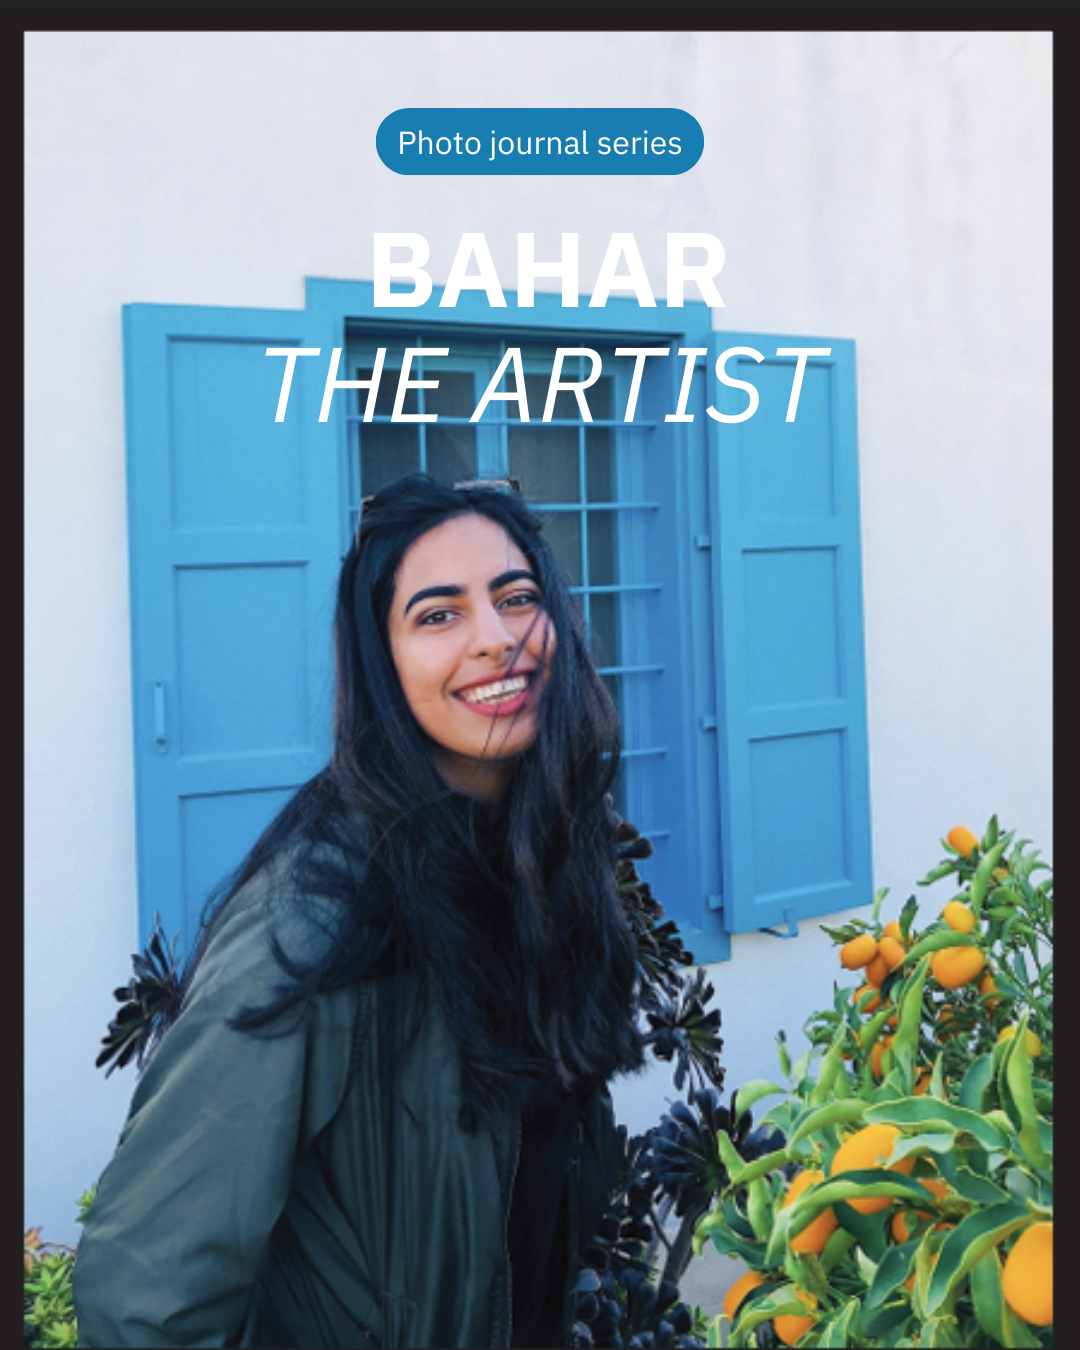 Bahar, the artist